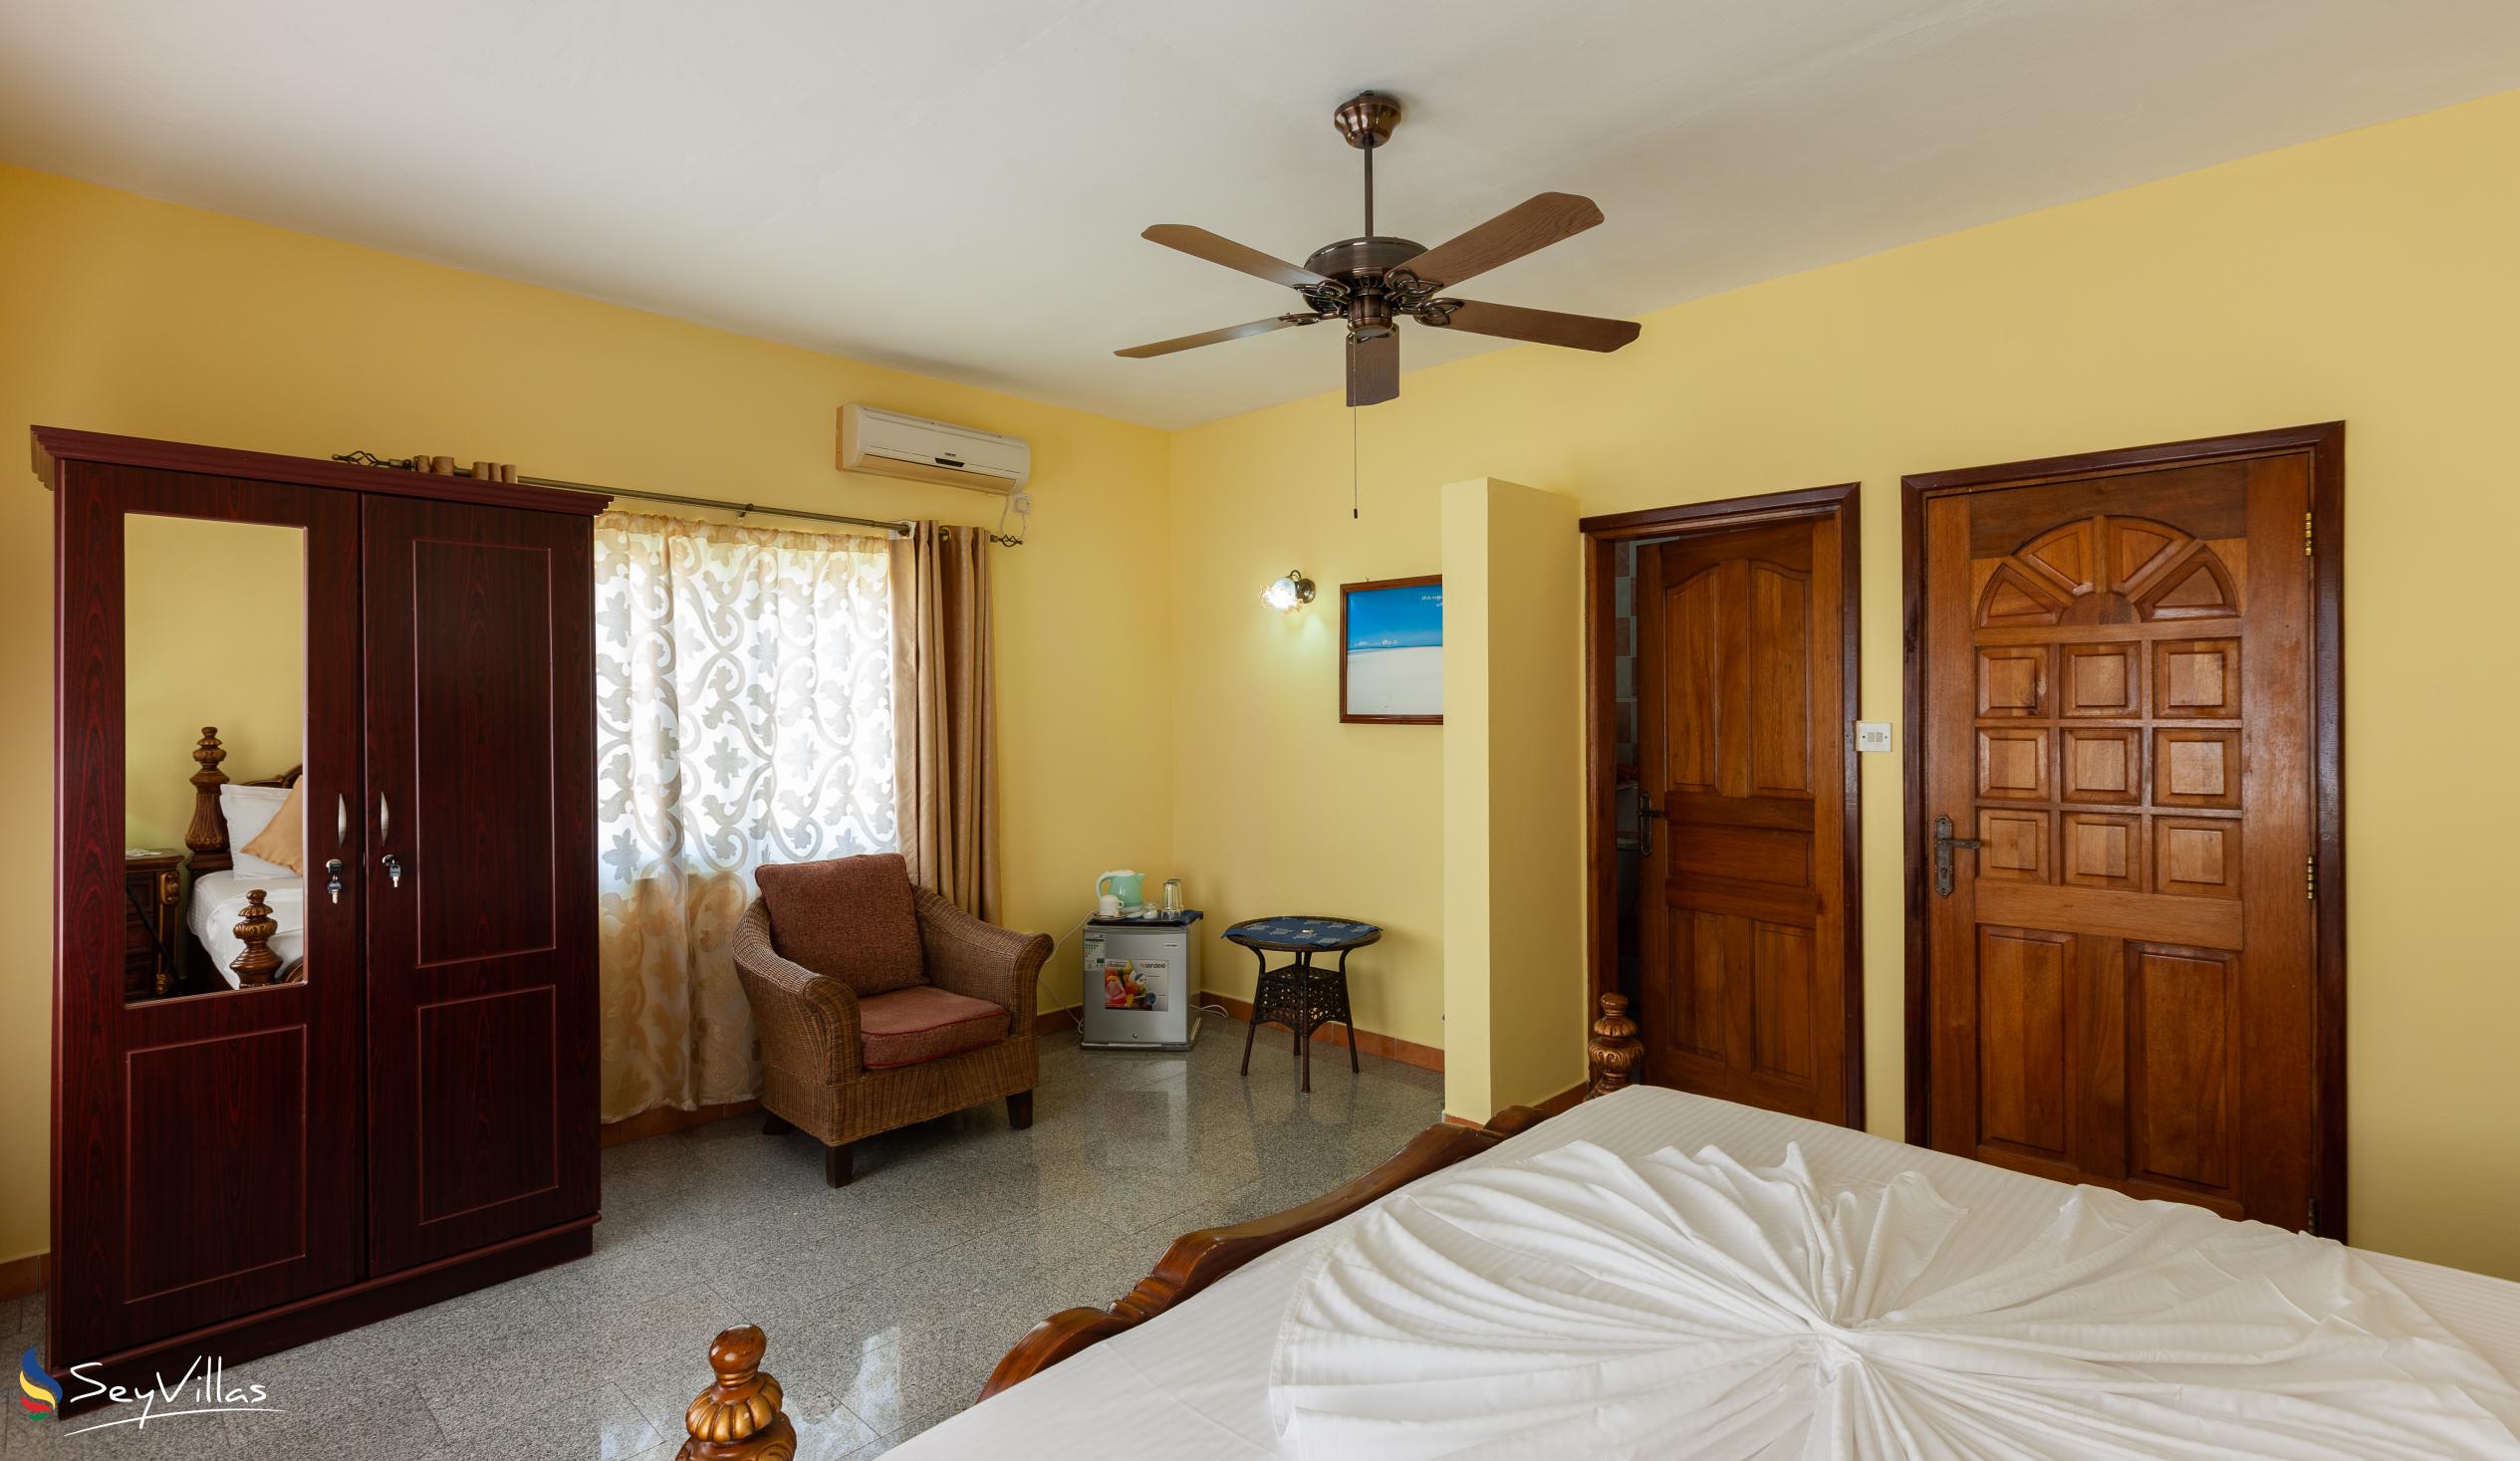 Photo 129: Villa Bananier - Superior Room - Praslin (Seychelles)